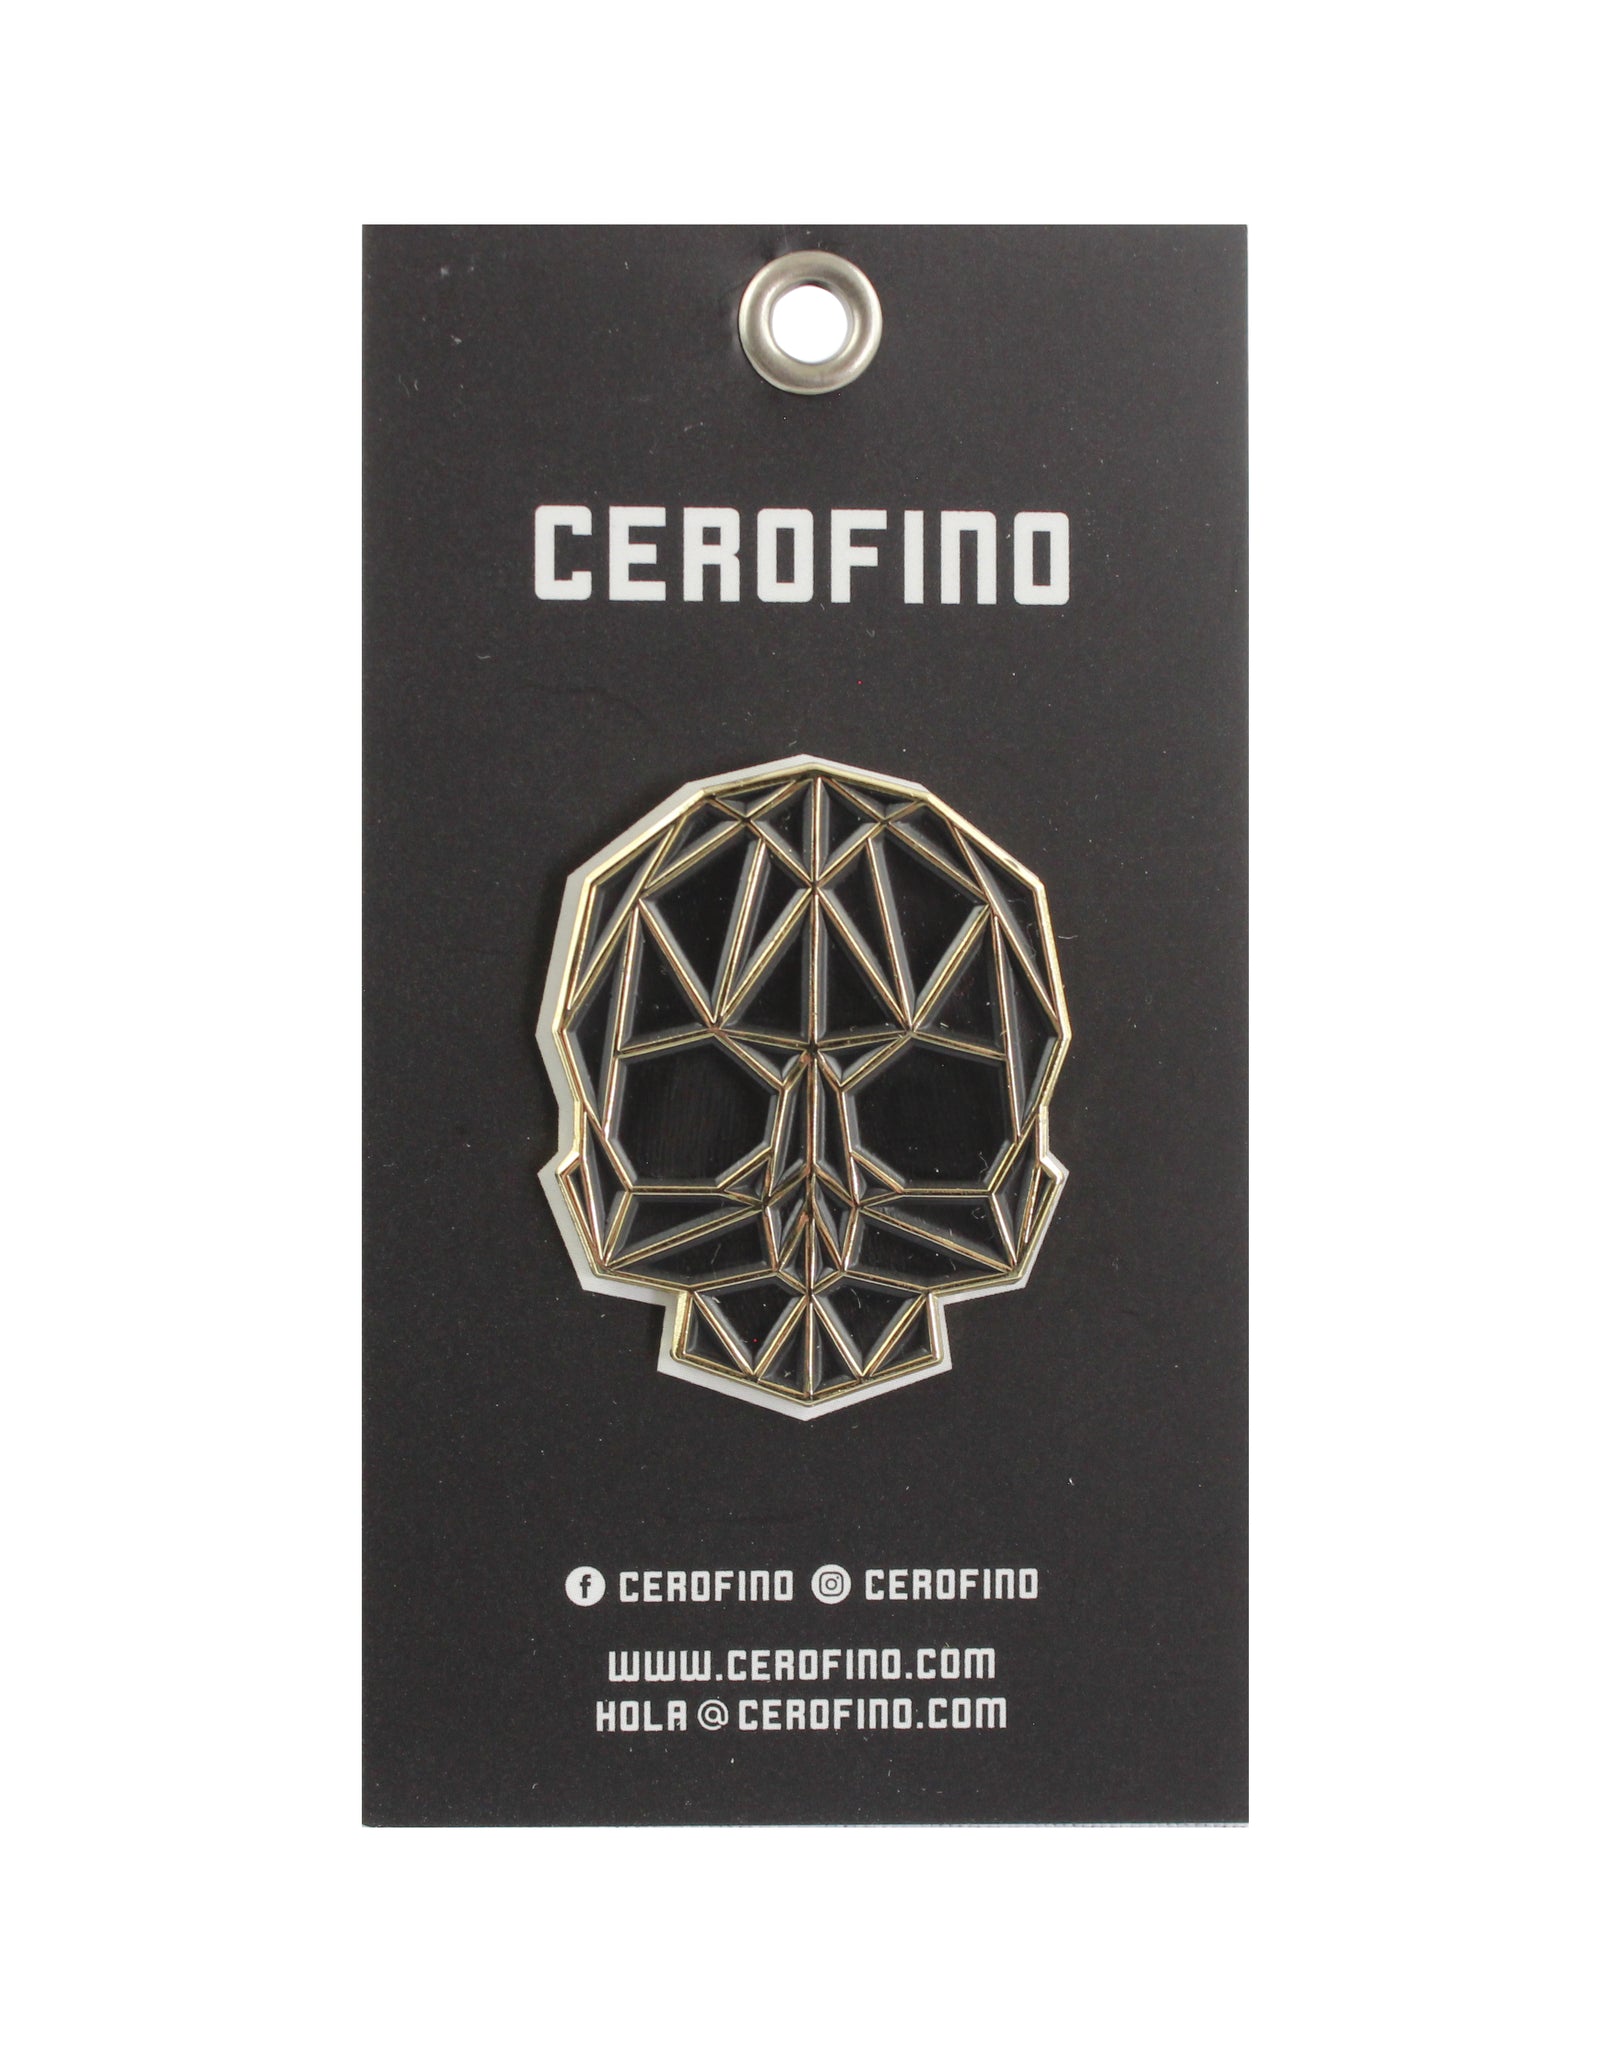 Pin "Cerofino" - Hipnosis